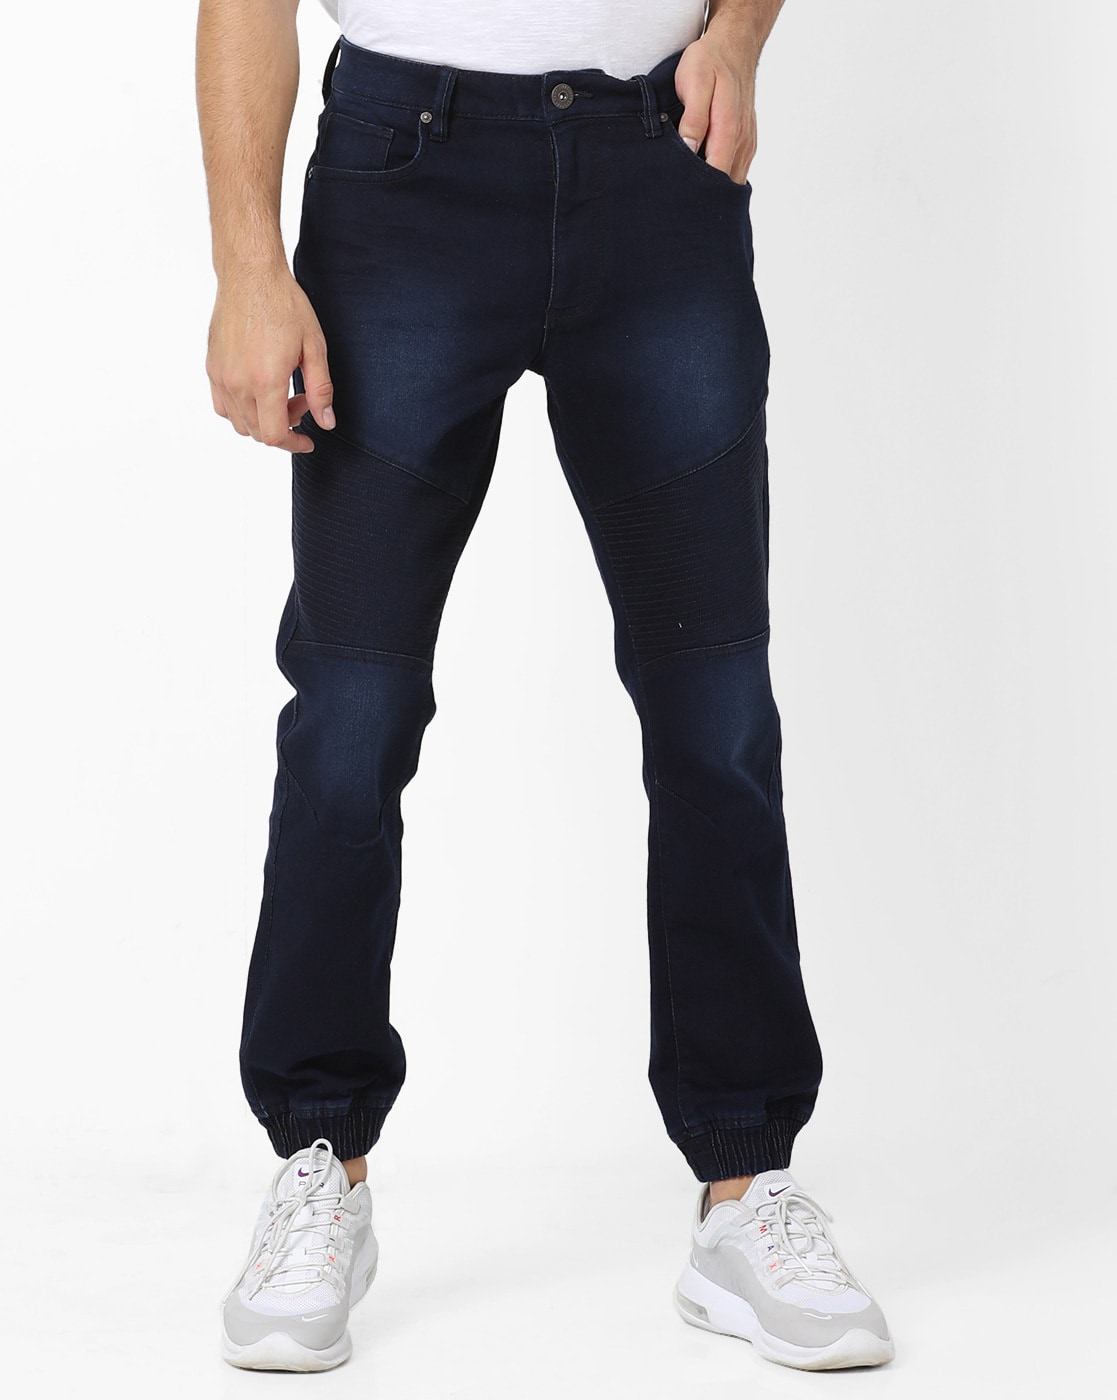 dnmx jogger jeans